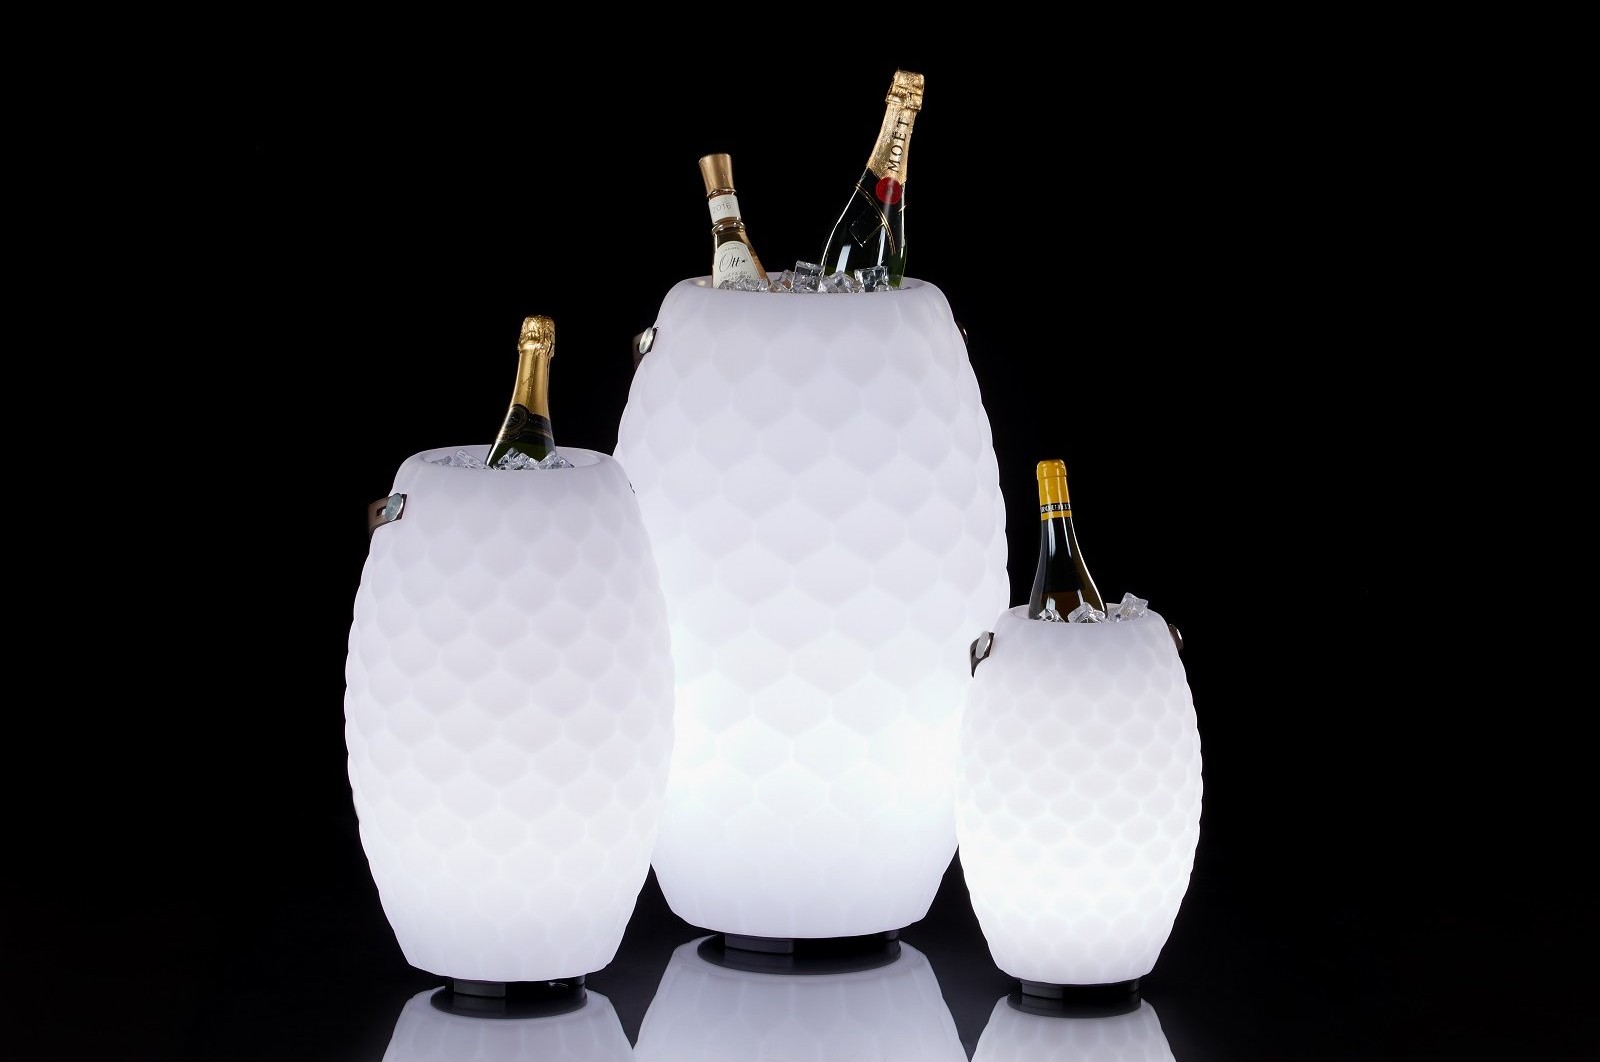 LEDublino65 LTD, LED Vase mit Bluetooth Lautsprecher, Höhe 65 cm, wasserfest